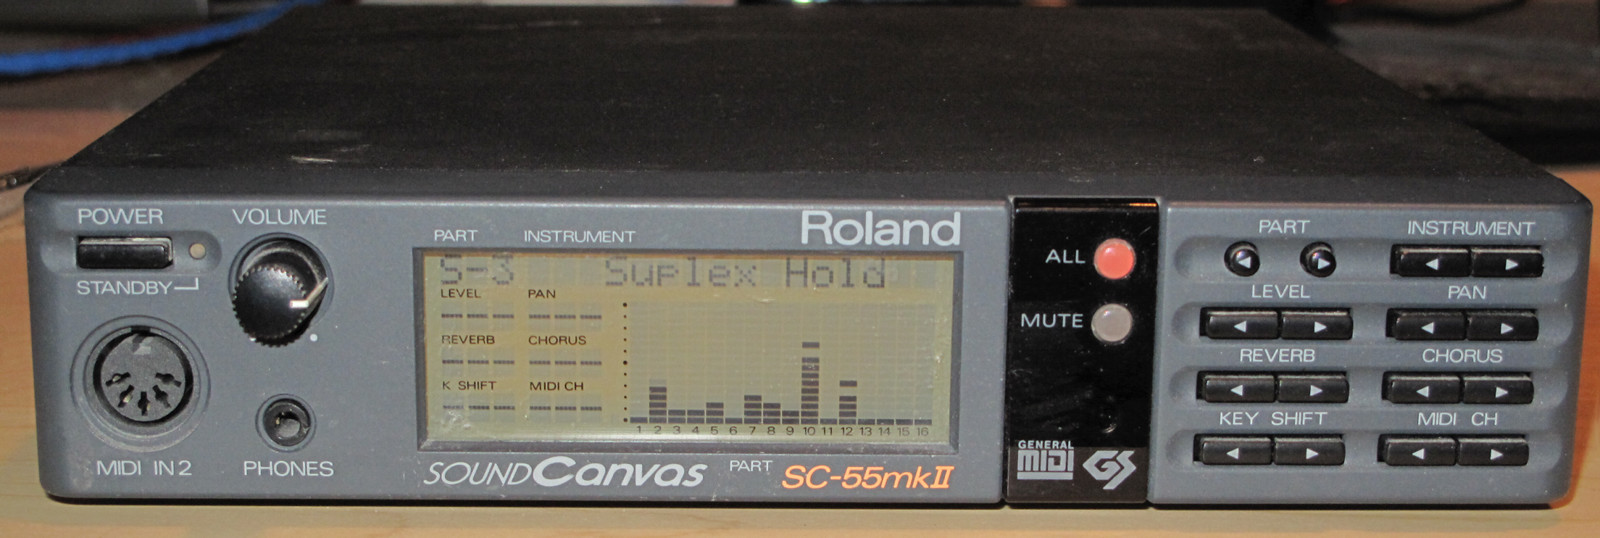 roland sound canvas output impedance